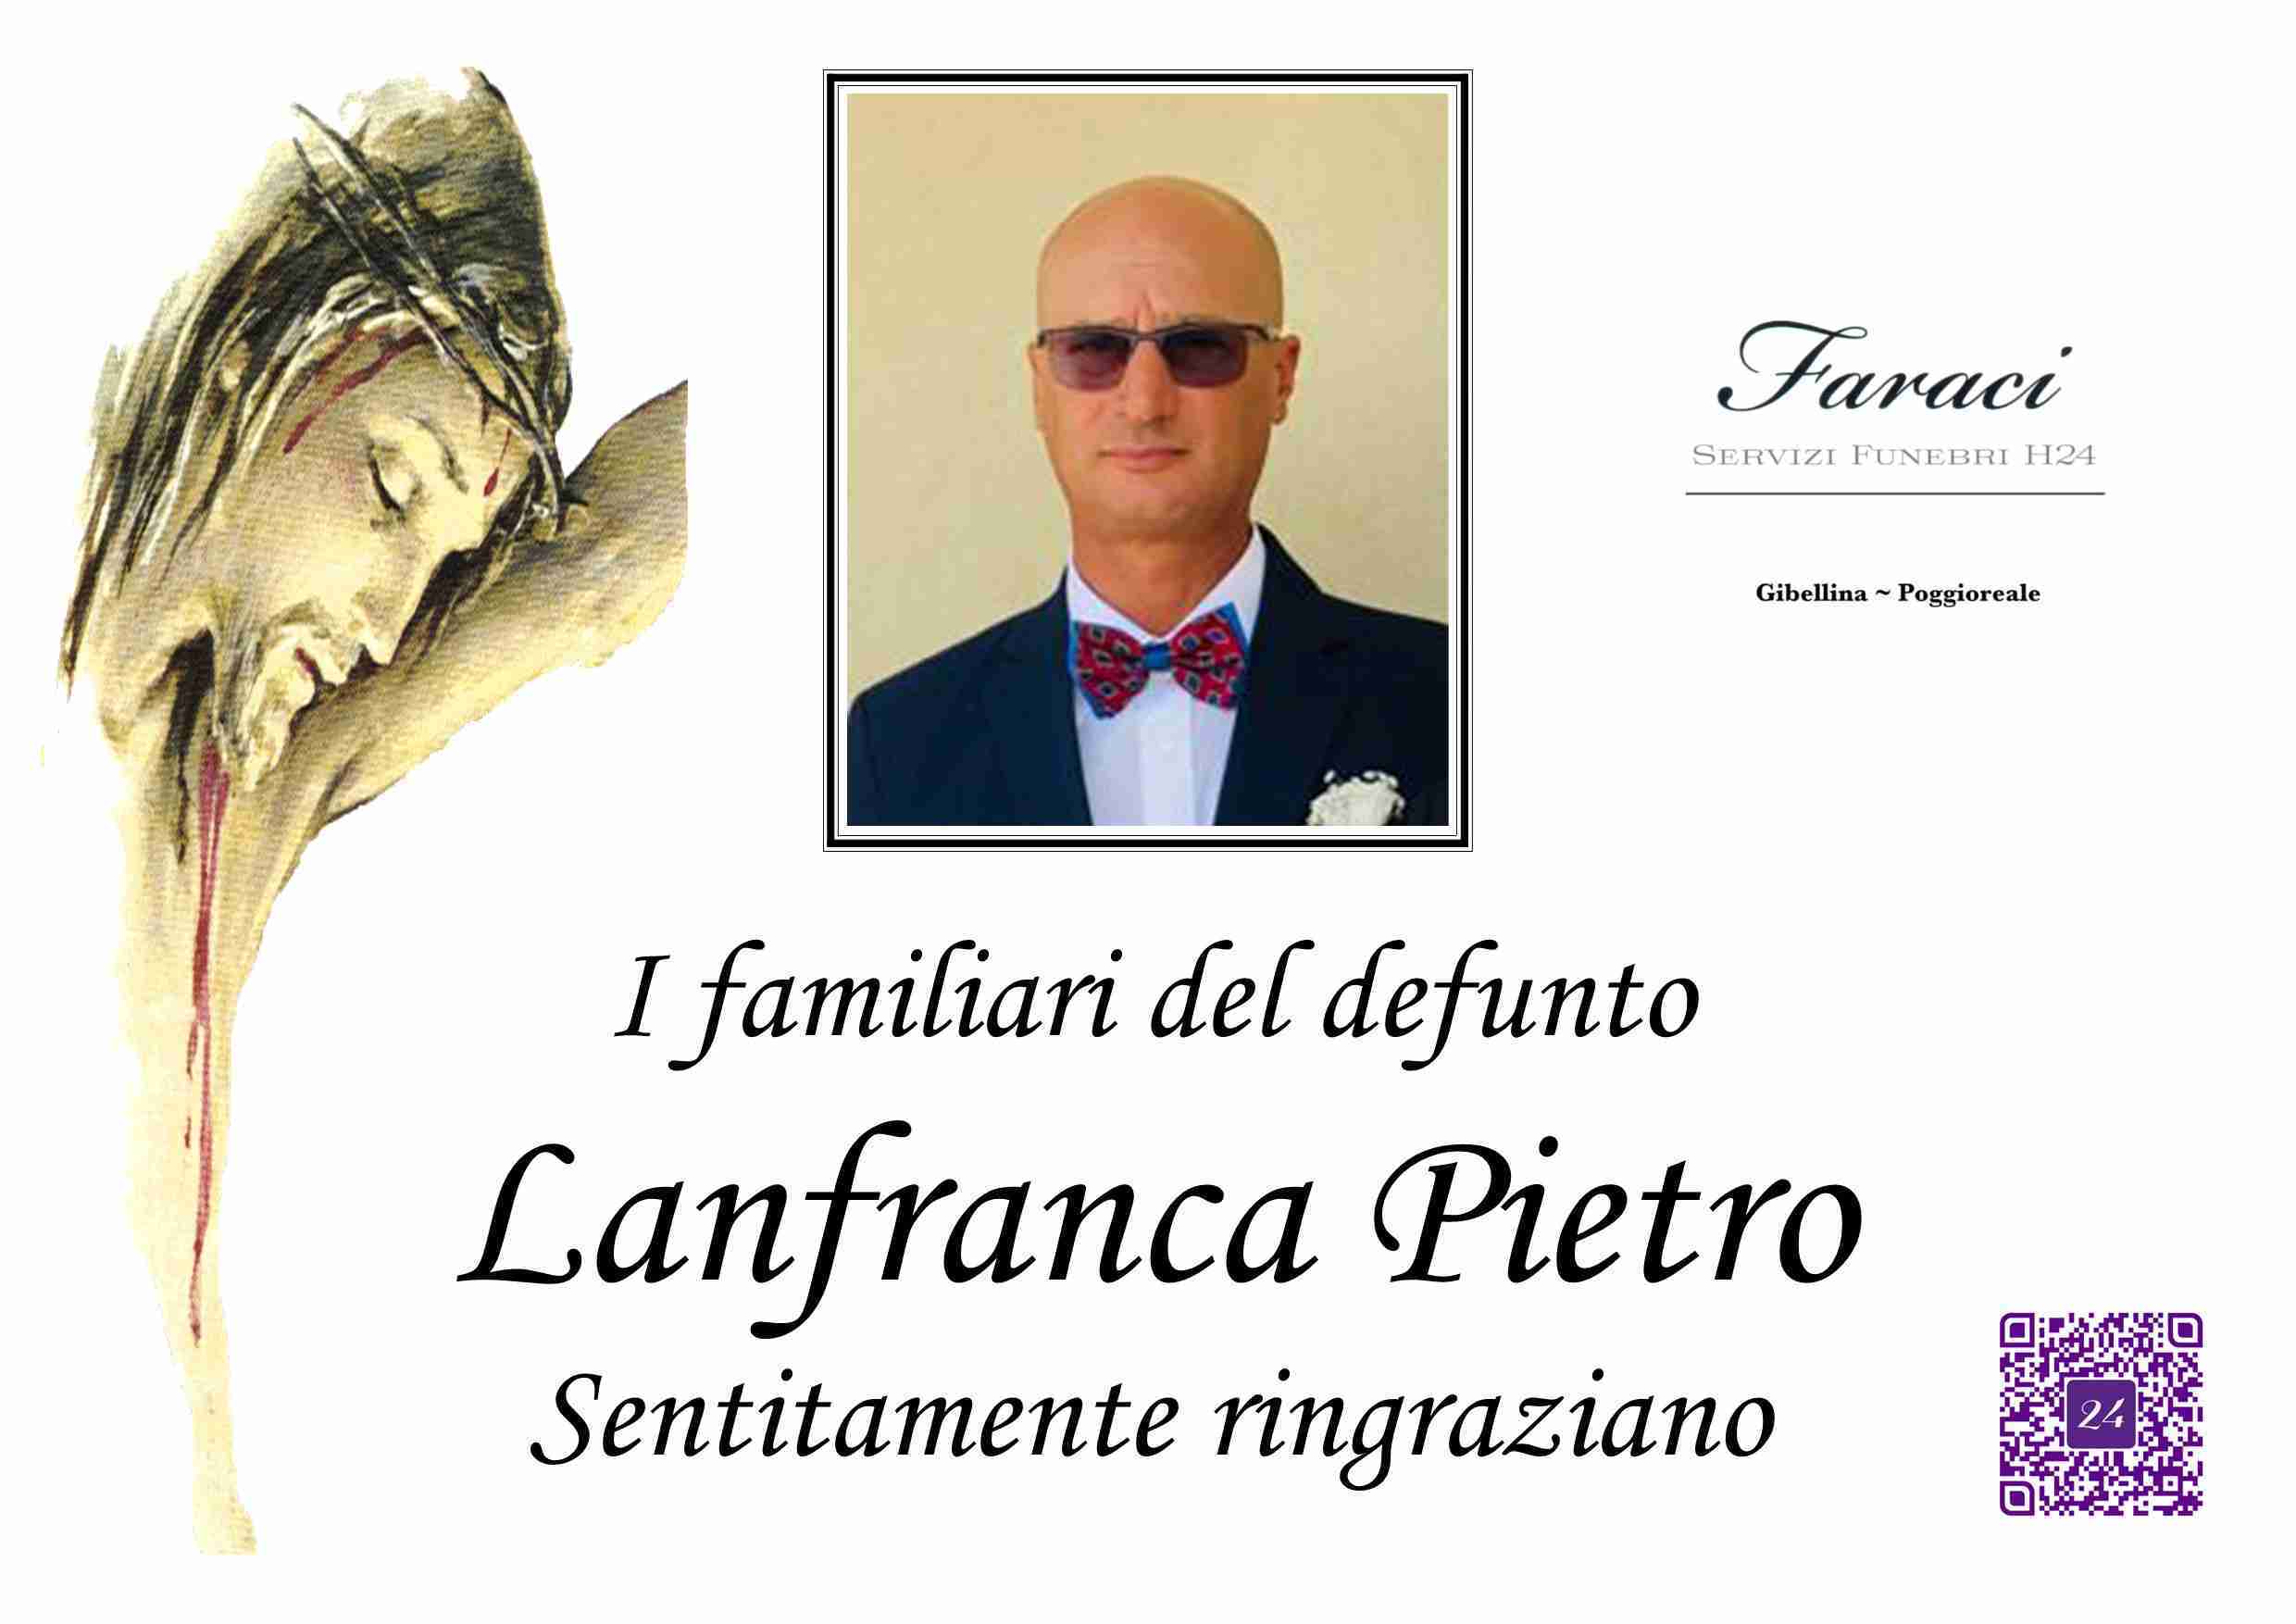 Pietro Lanfranca